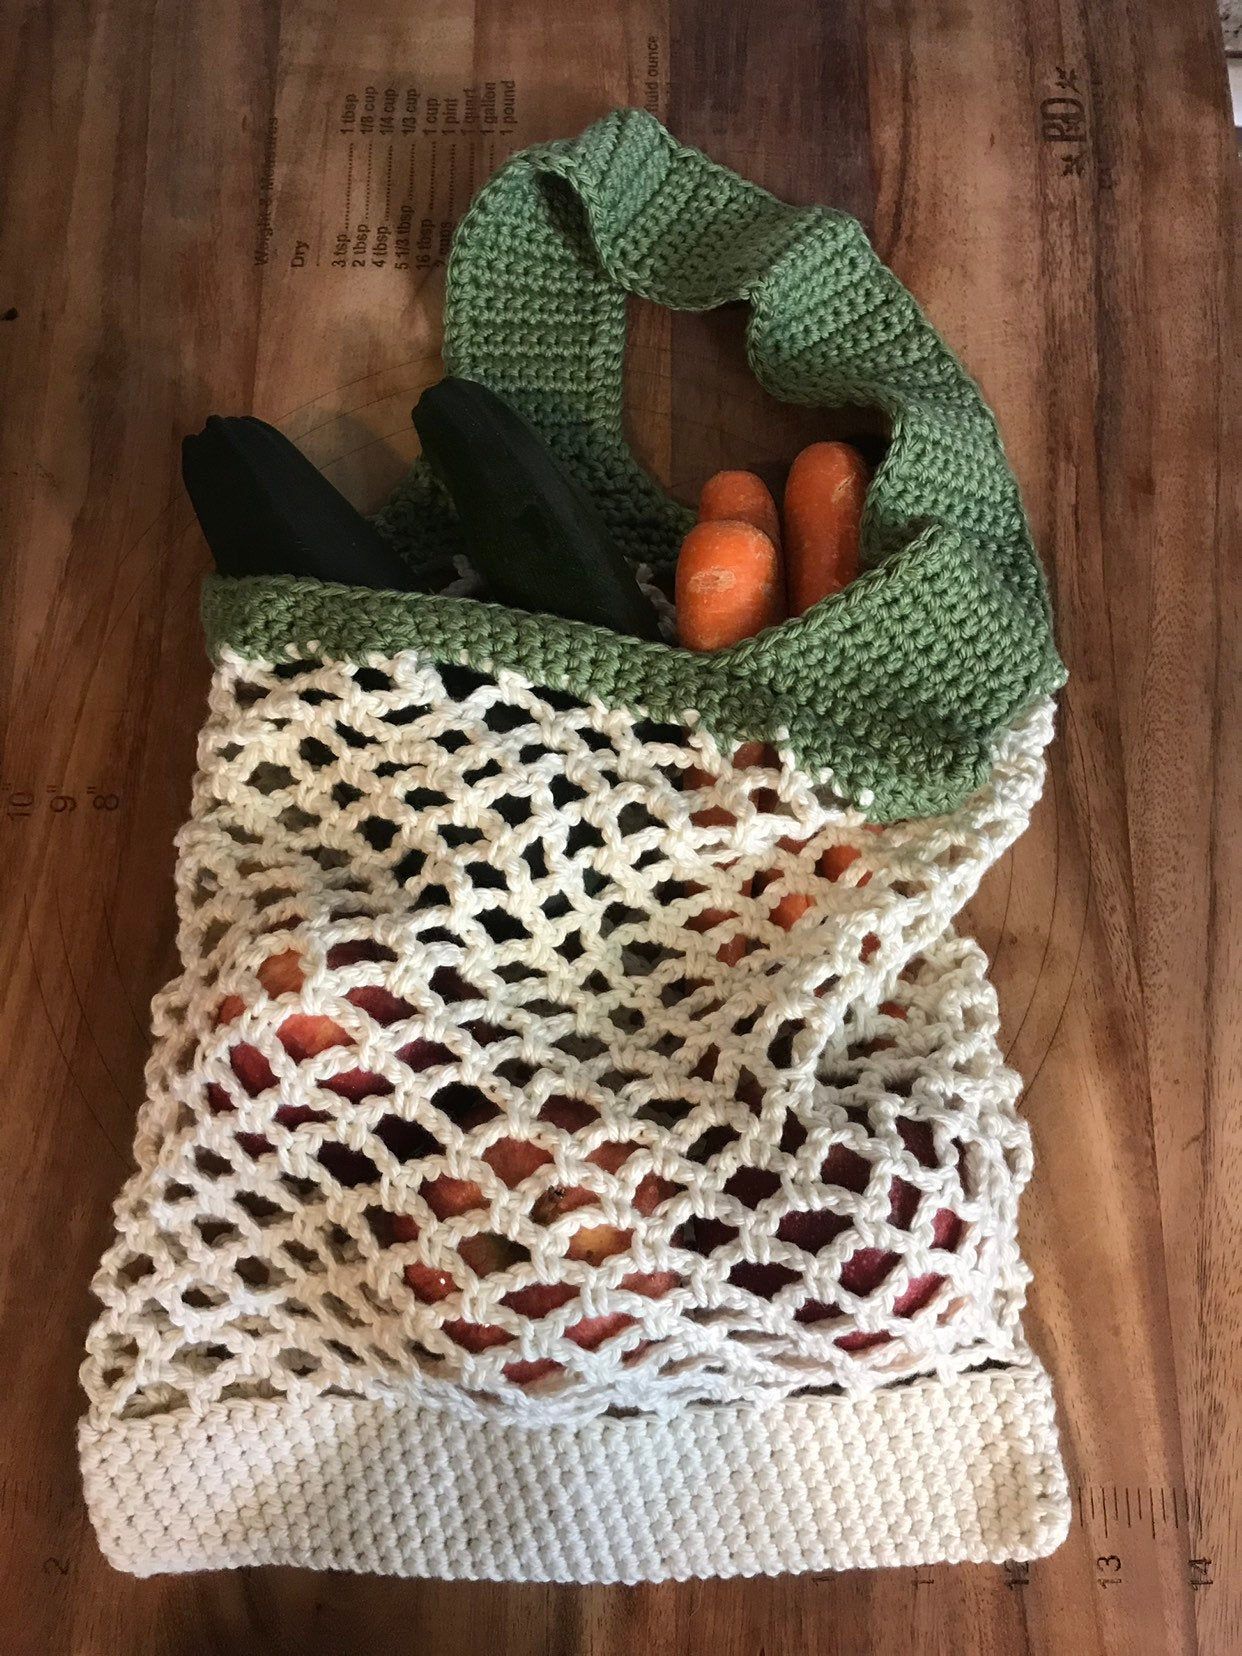 Crochet farmers market bag